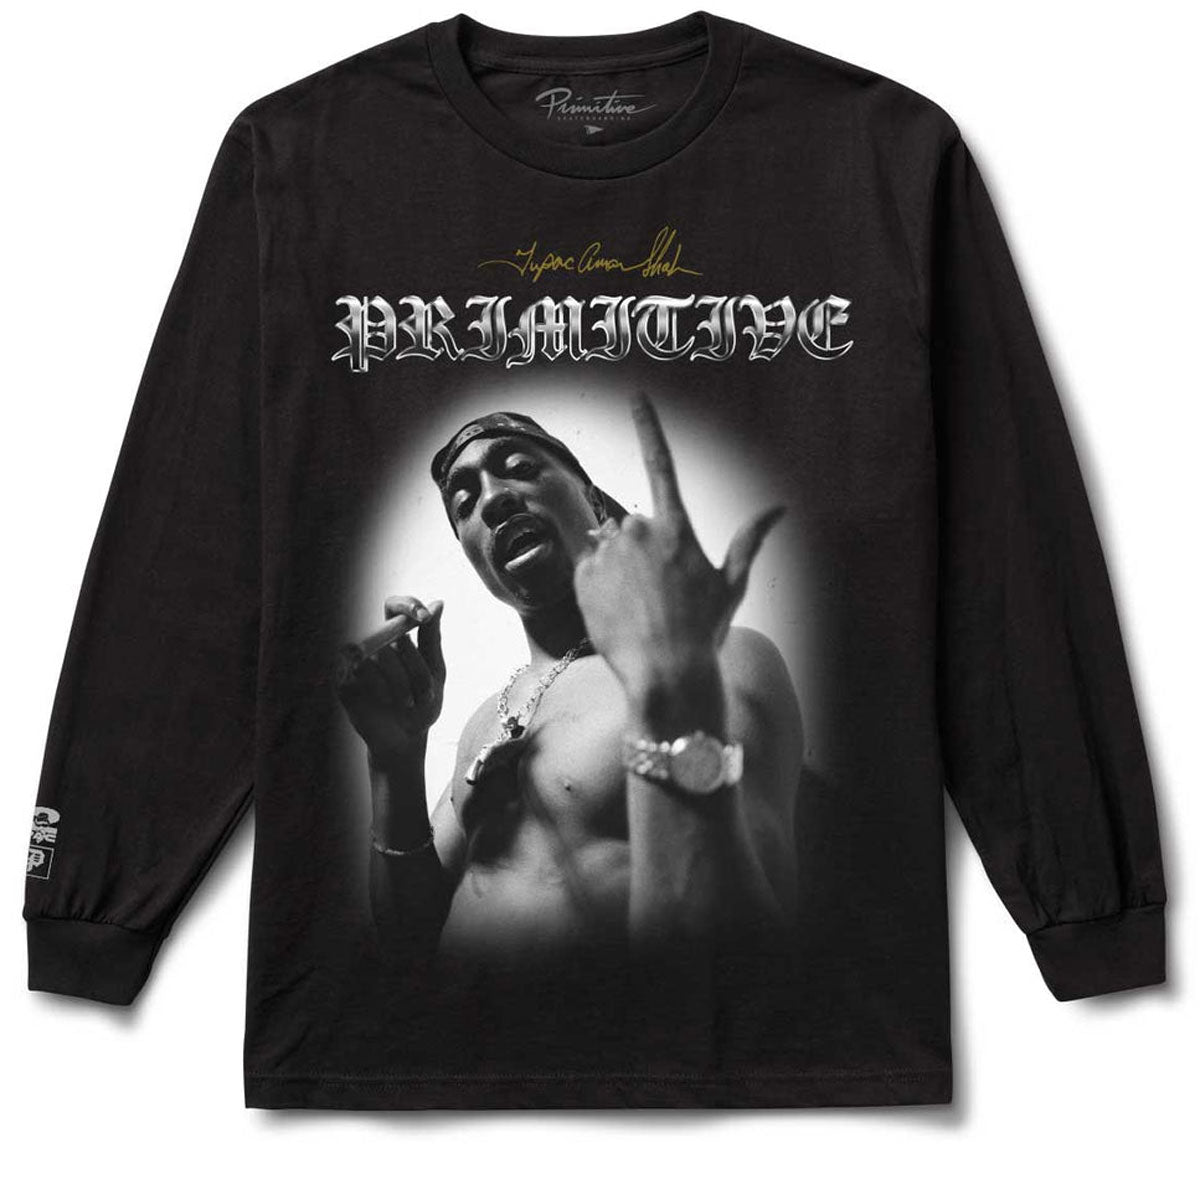 Primitive x Tupac One Long Sleeve T-Shirt - Black image 1